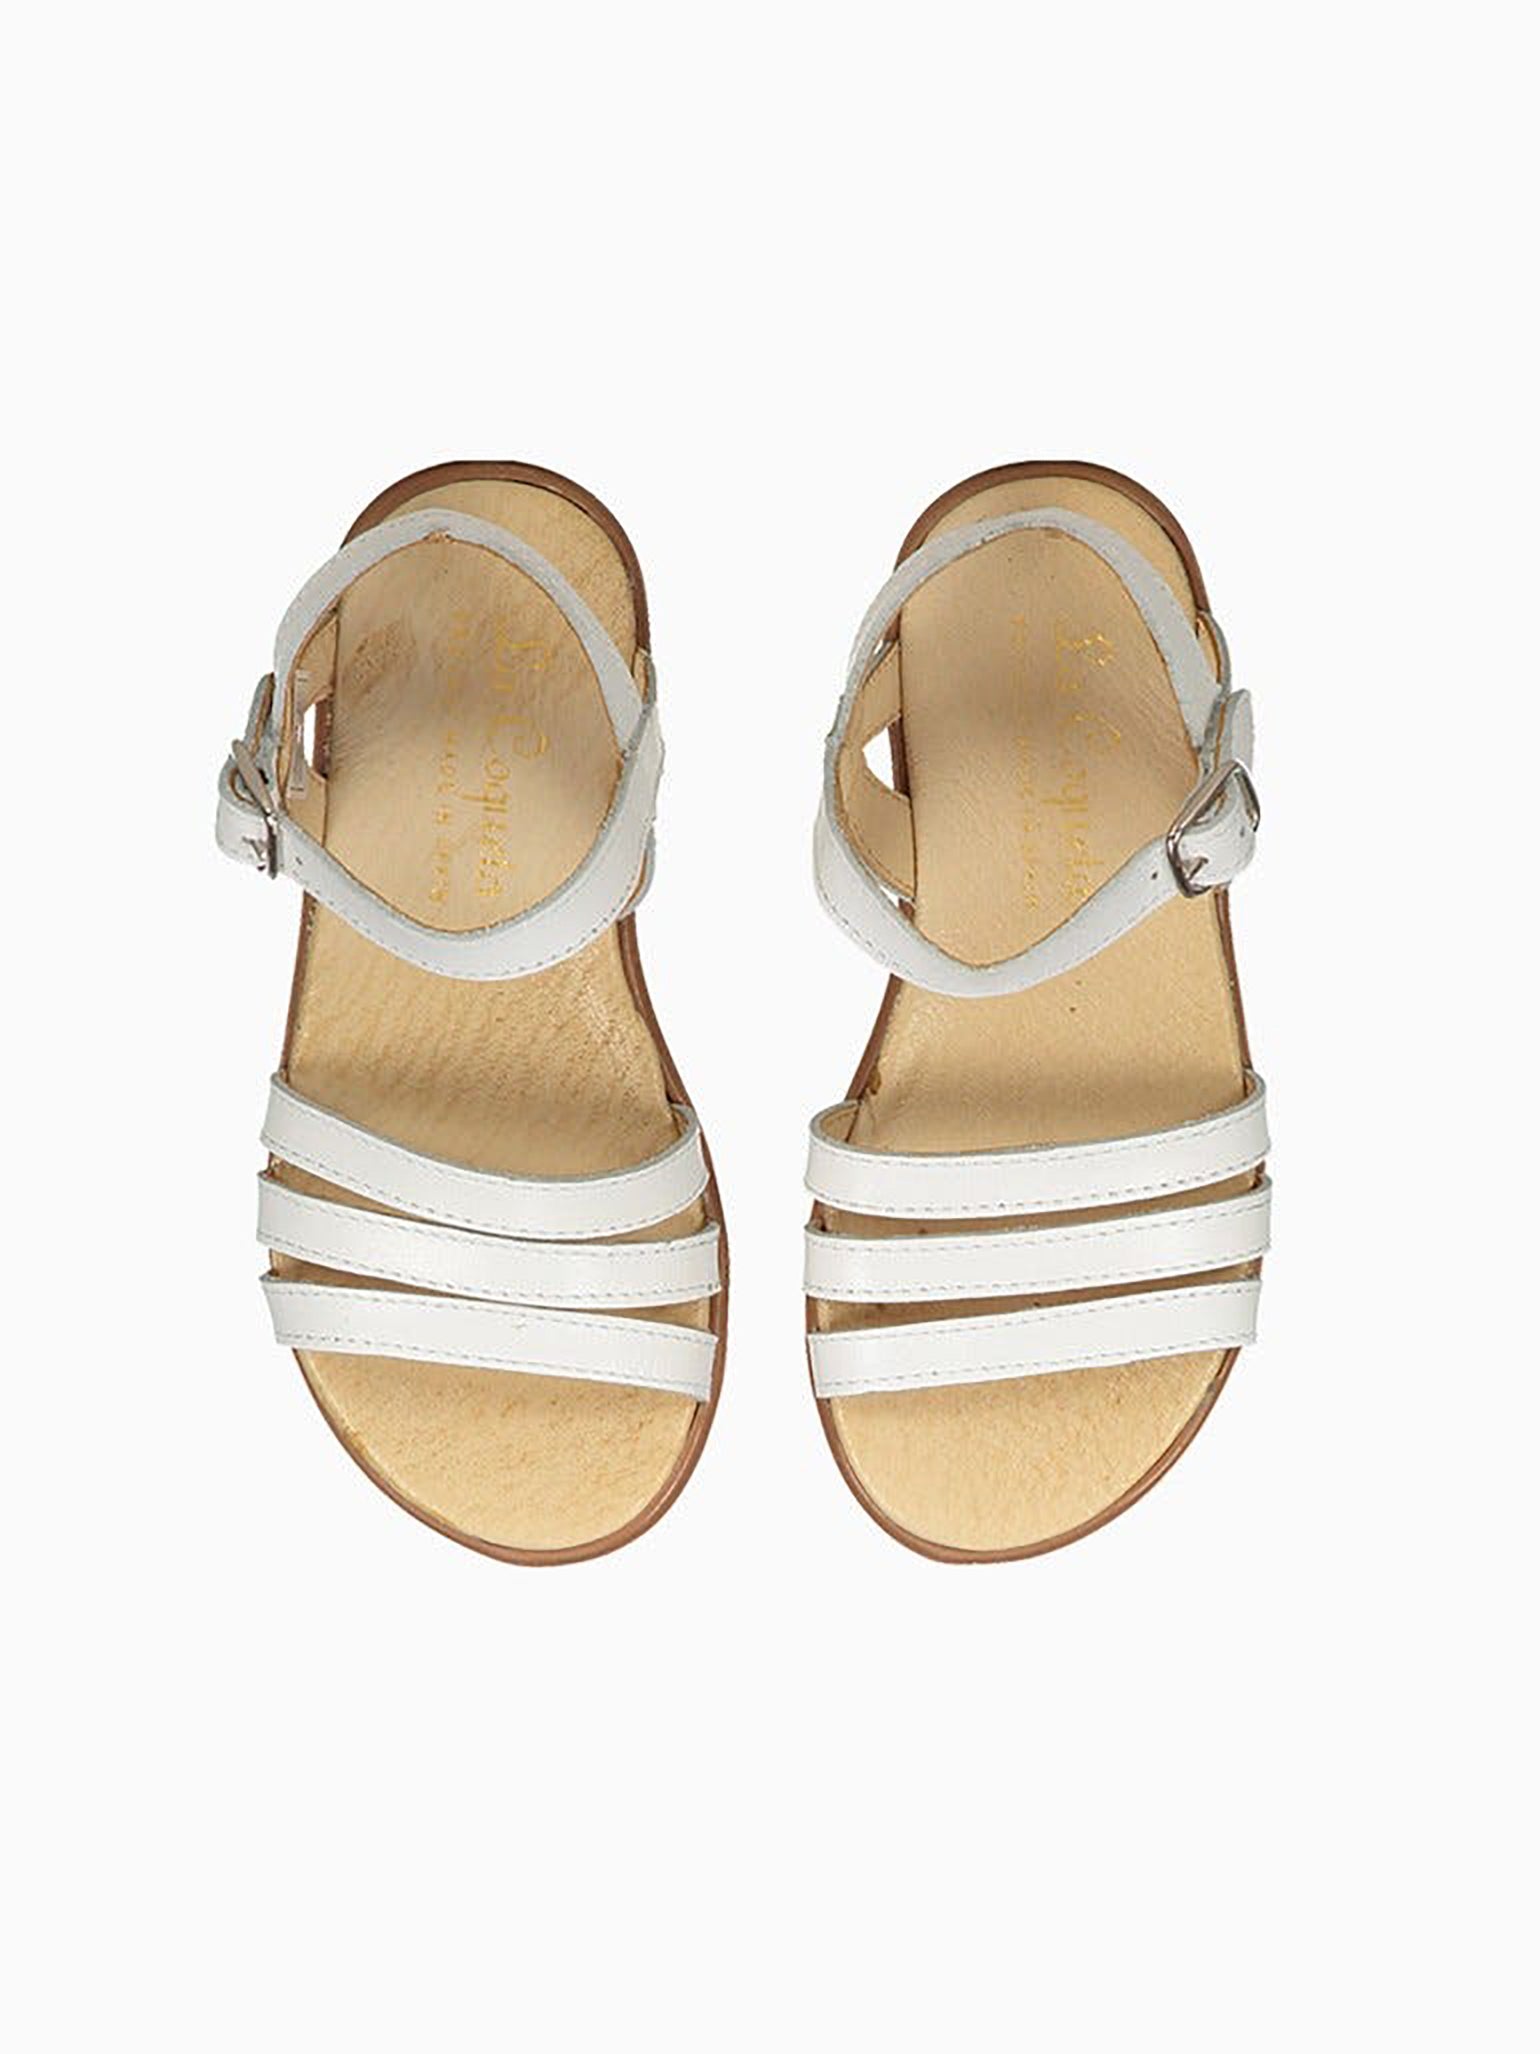 Girls Sandals & Flip Flops - Summer Sandals for Girls | La Coqueta Kids